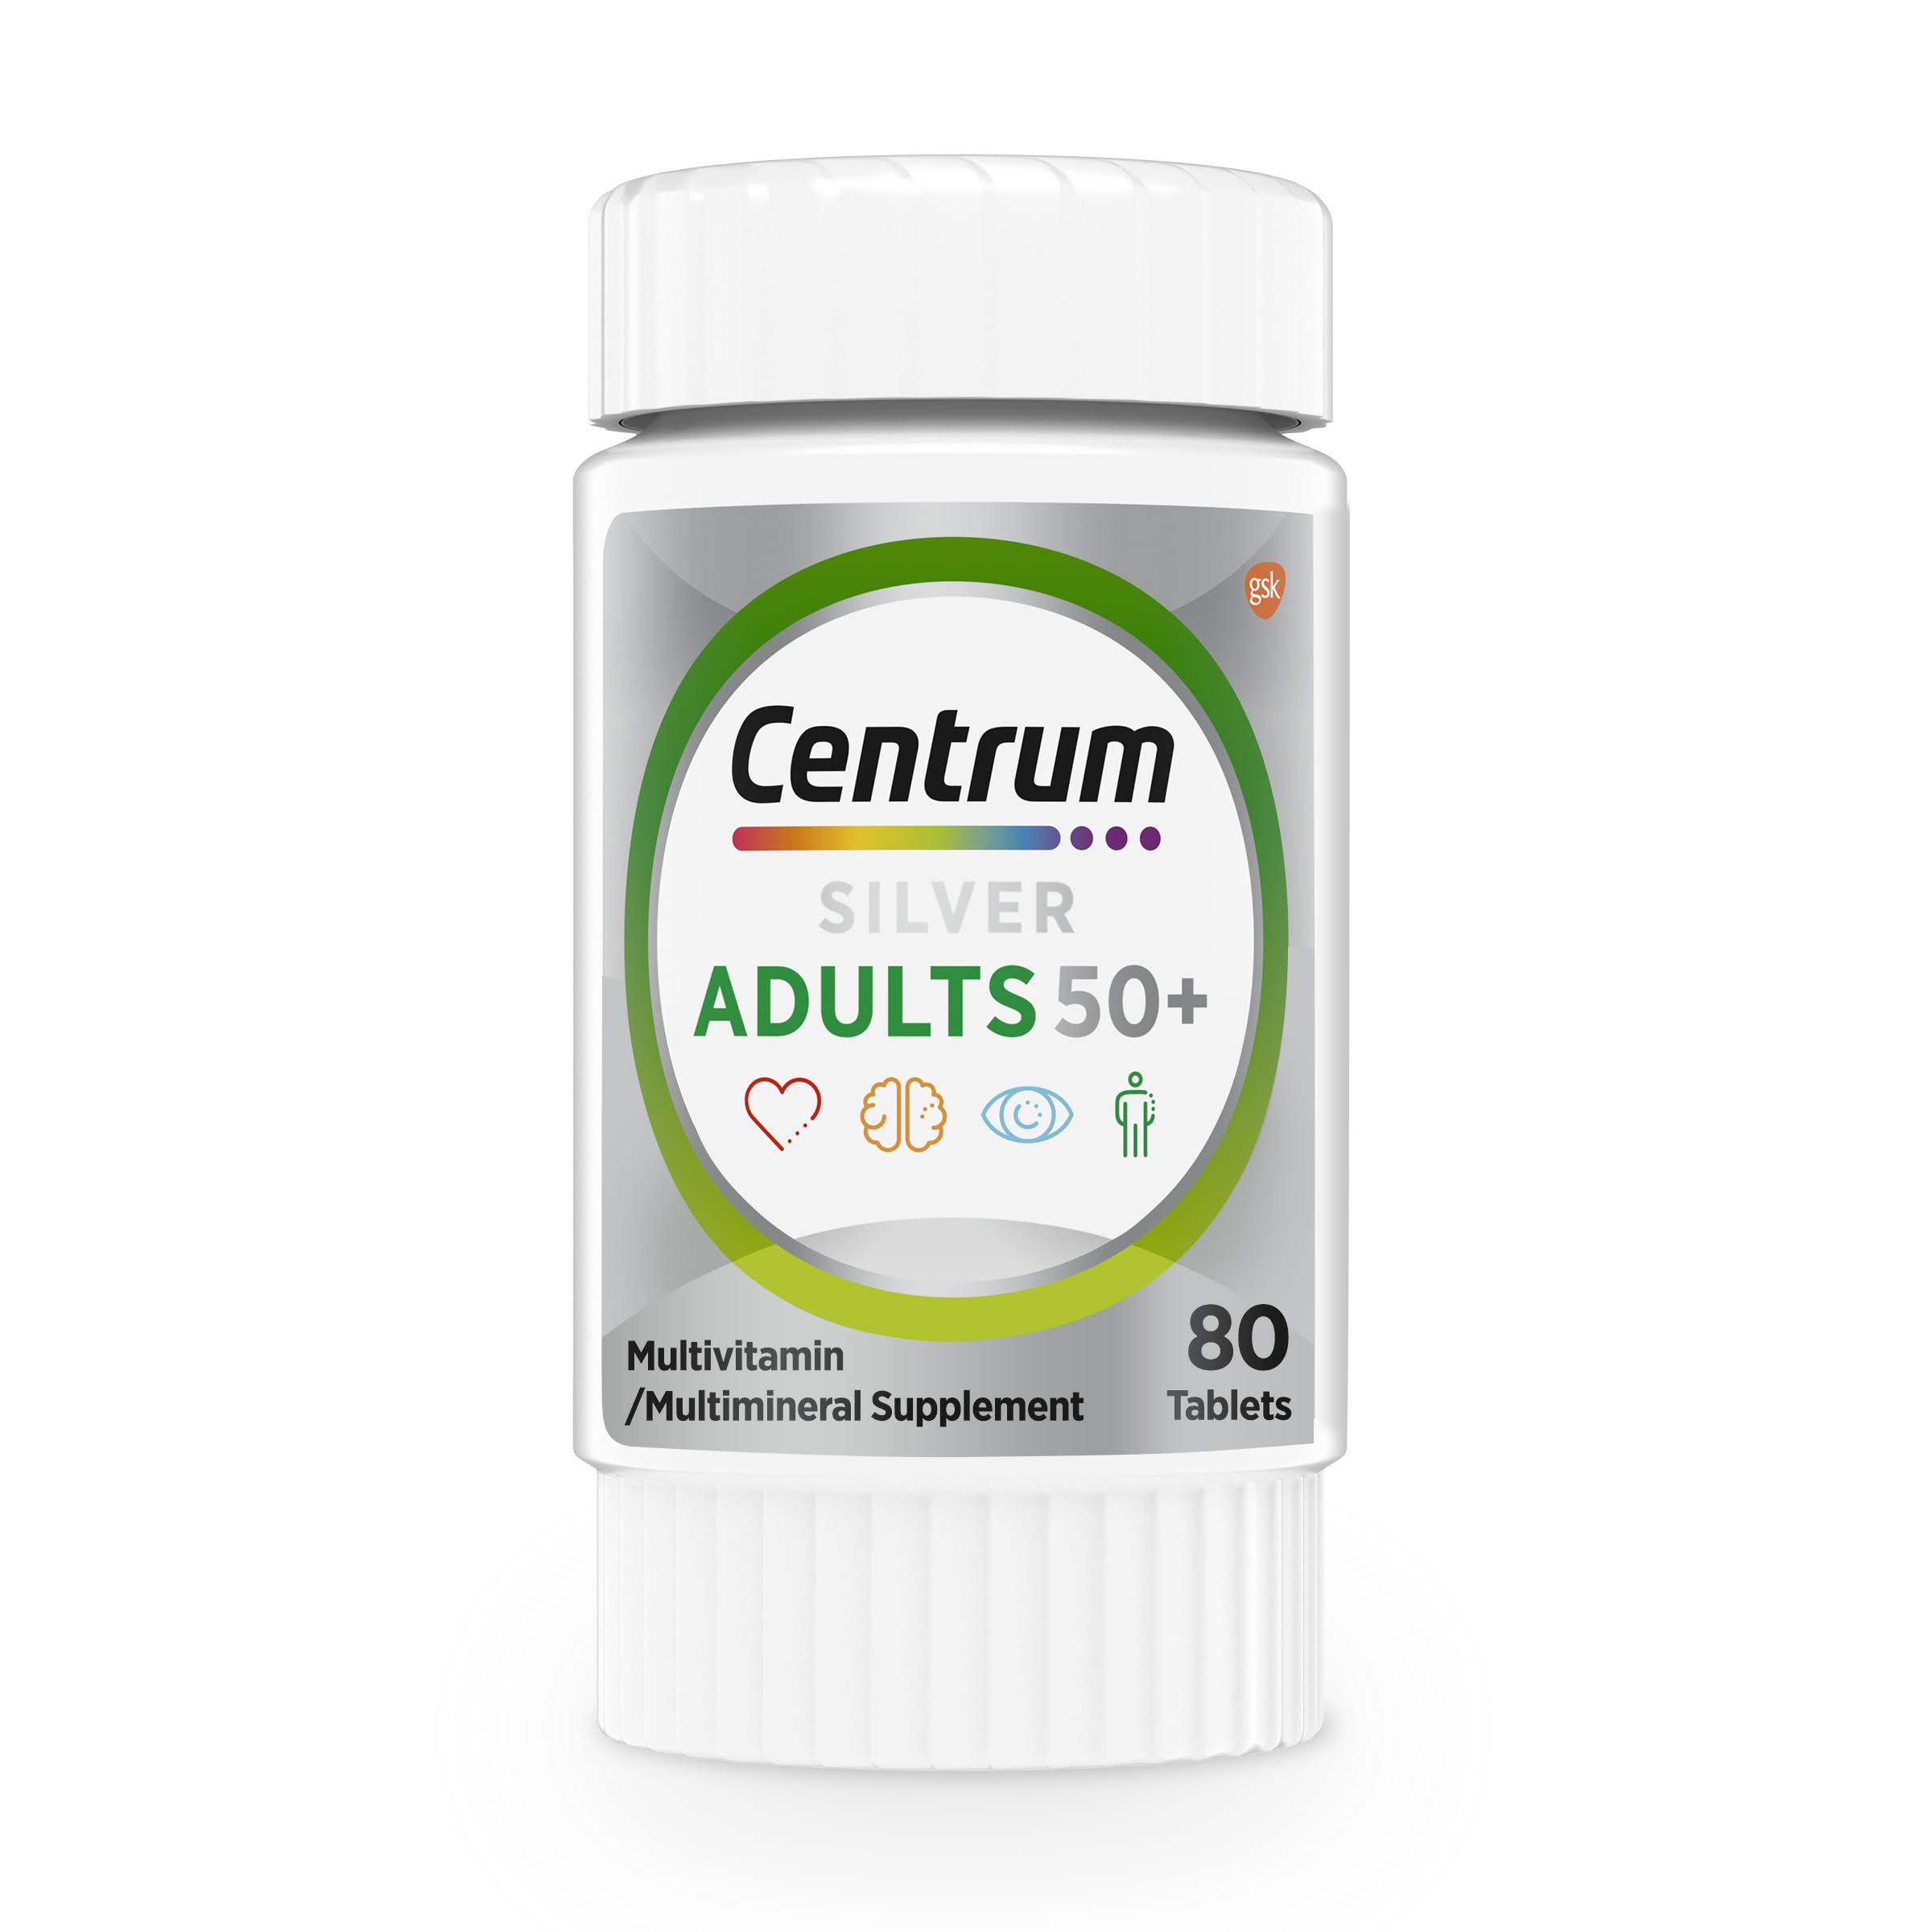 Centrum Silver Multivitamin/Multimineral, Adults 50+, Tablets - 80 tablets